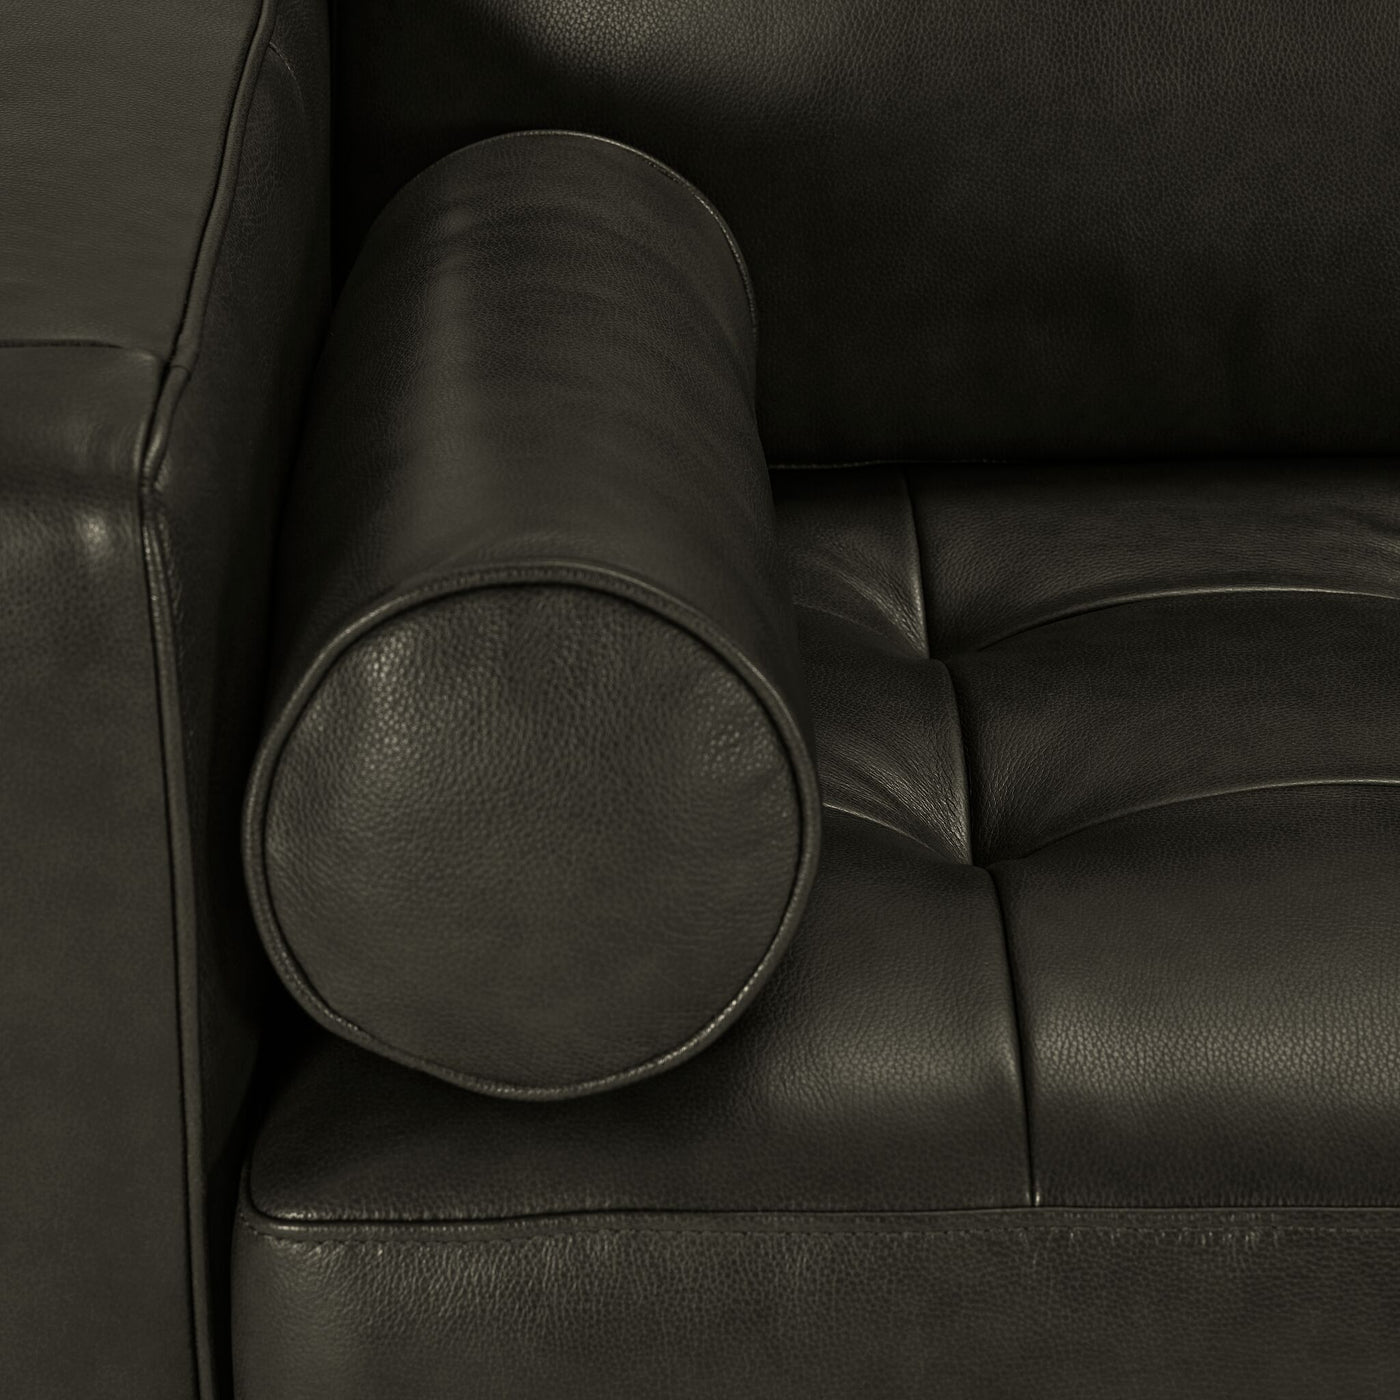 Bari Leather Sofa and Loveseat Set - Charcoal